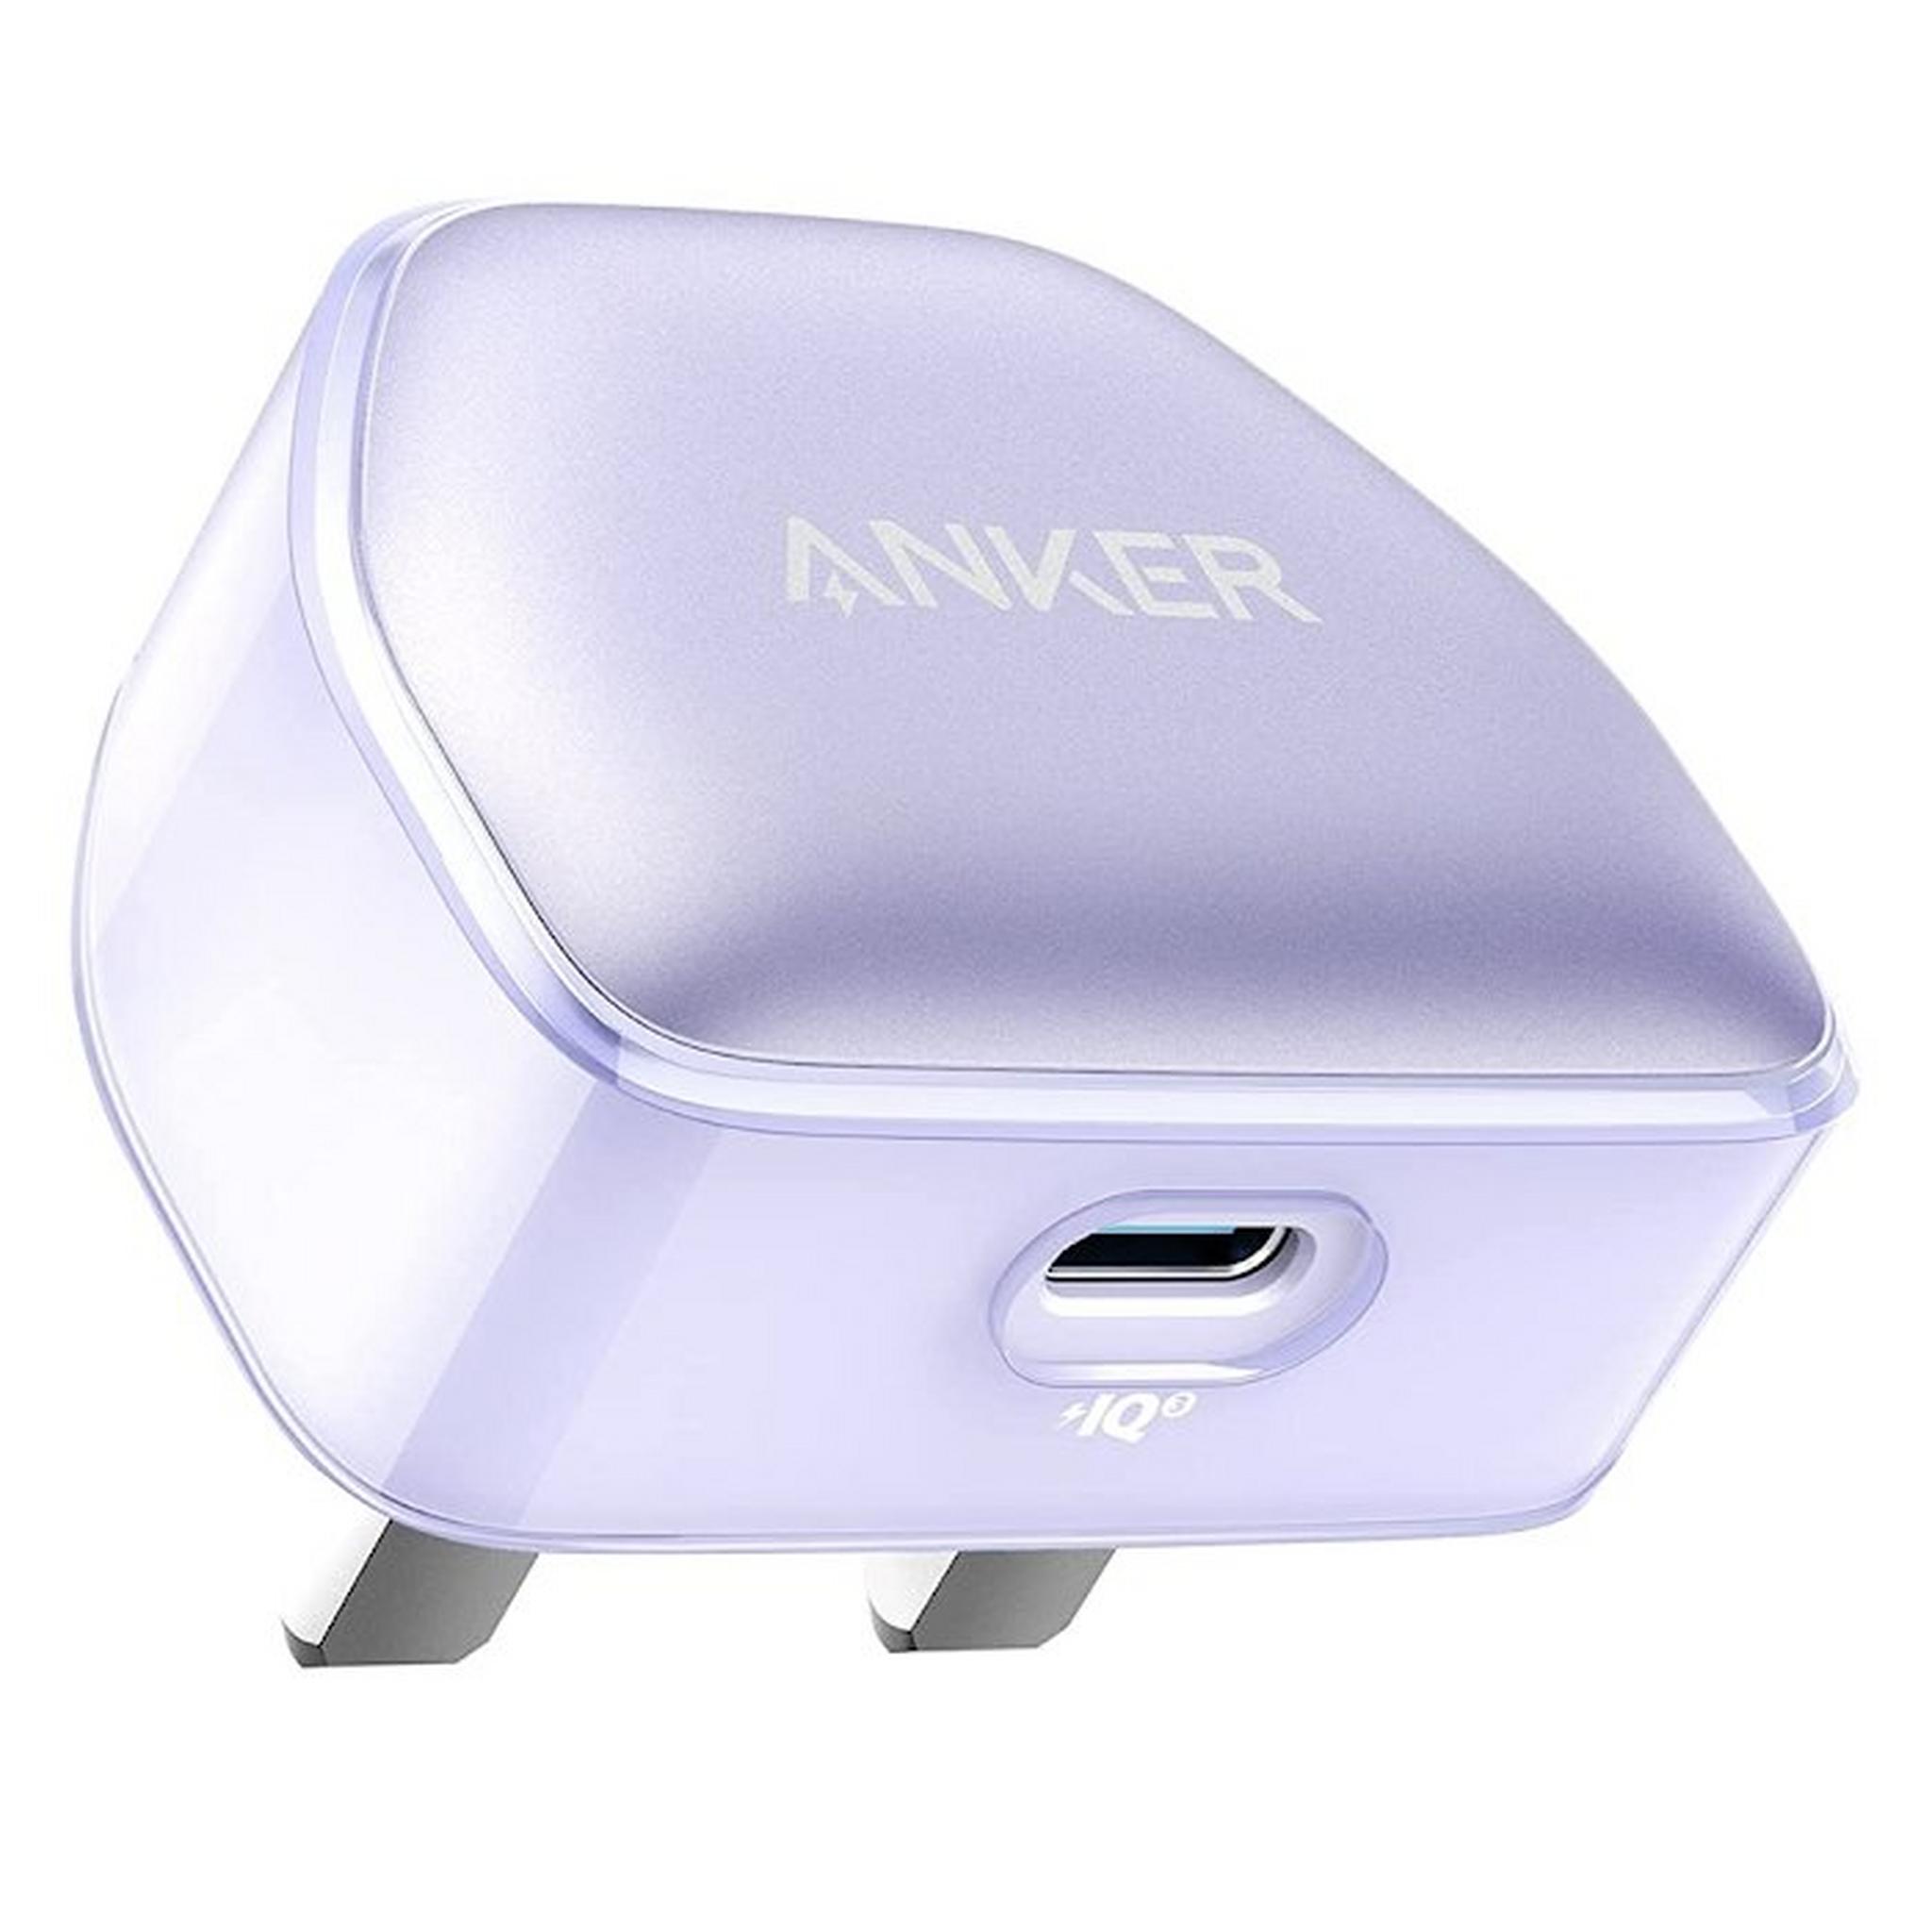 Anker 511 NanoPro 20W Charger - Purple